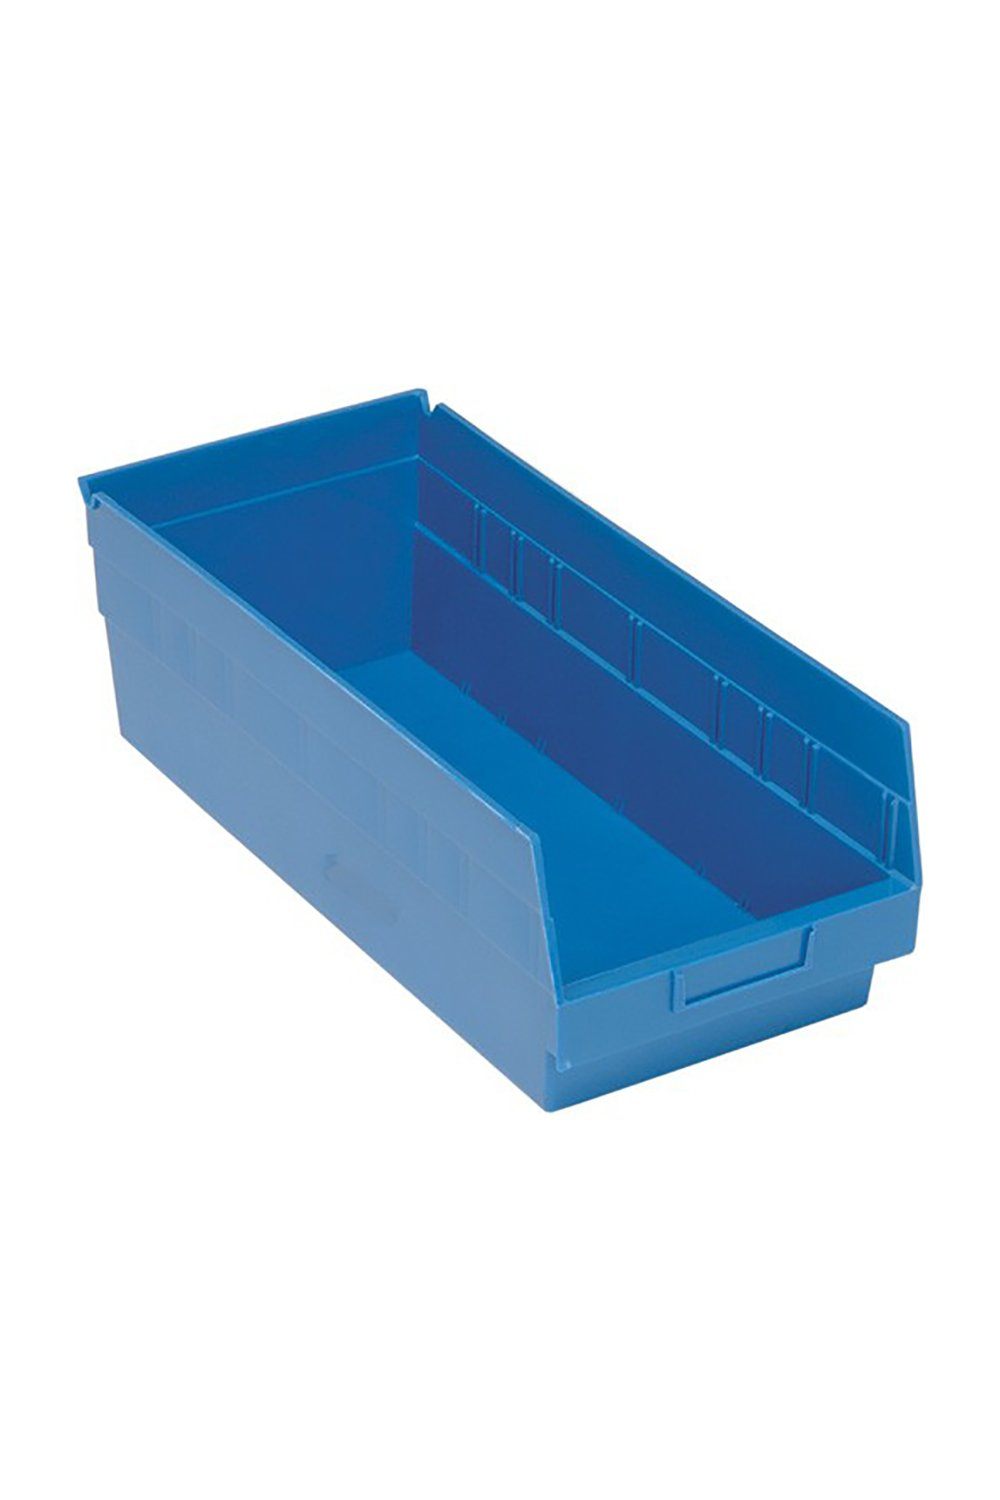 Shelf Bin for 24"D Shelves Bins & Containers Acart 17-7/8'' x 8-3/8'' x 6'' Blue 